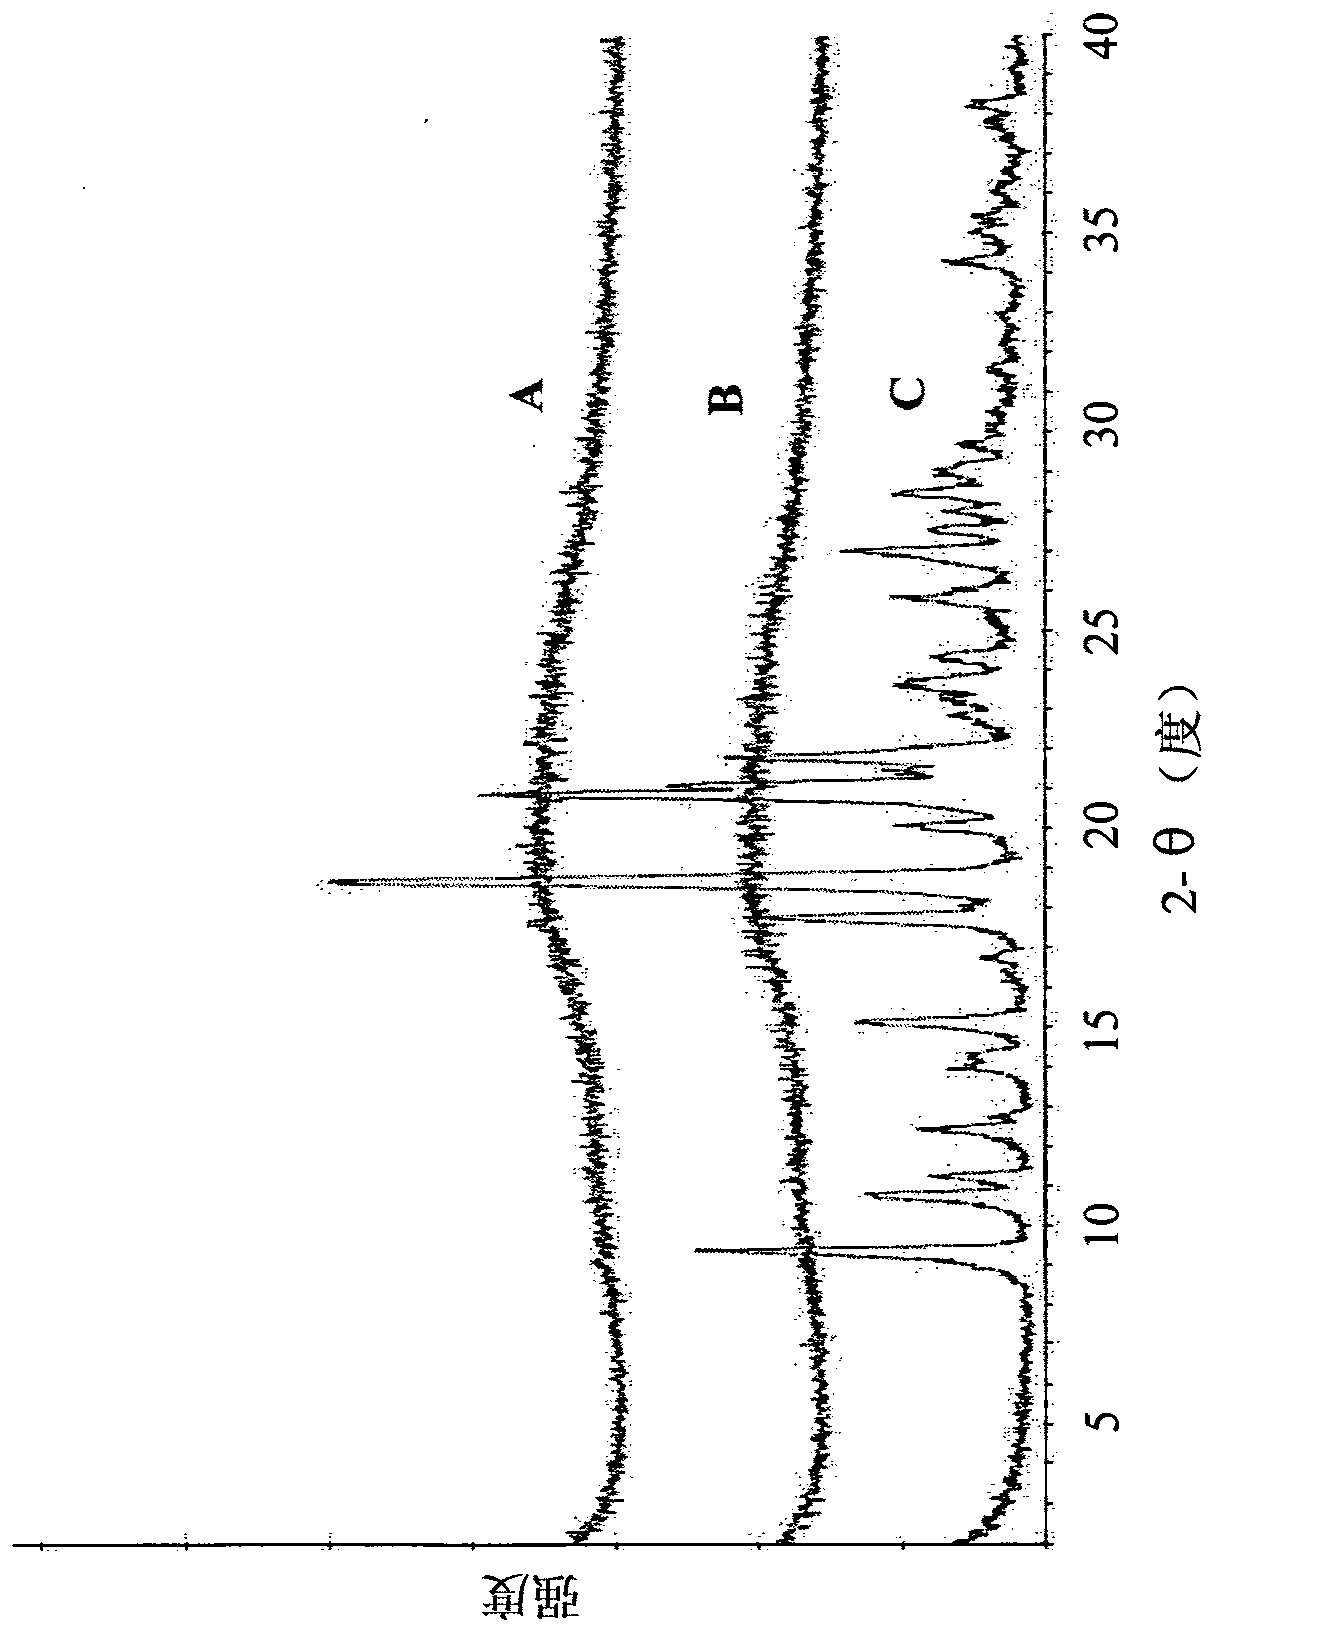 Polymorphs of alogliptin benzoate